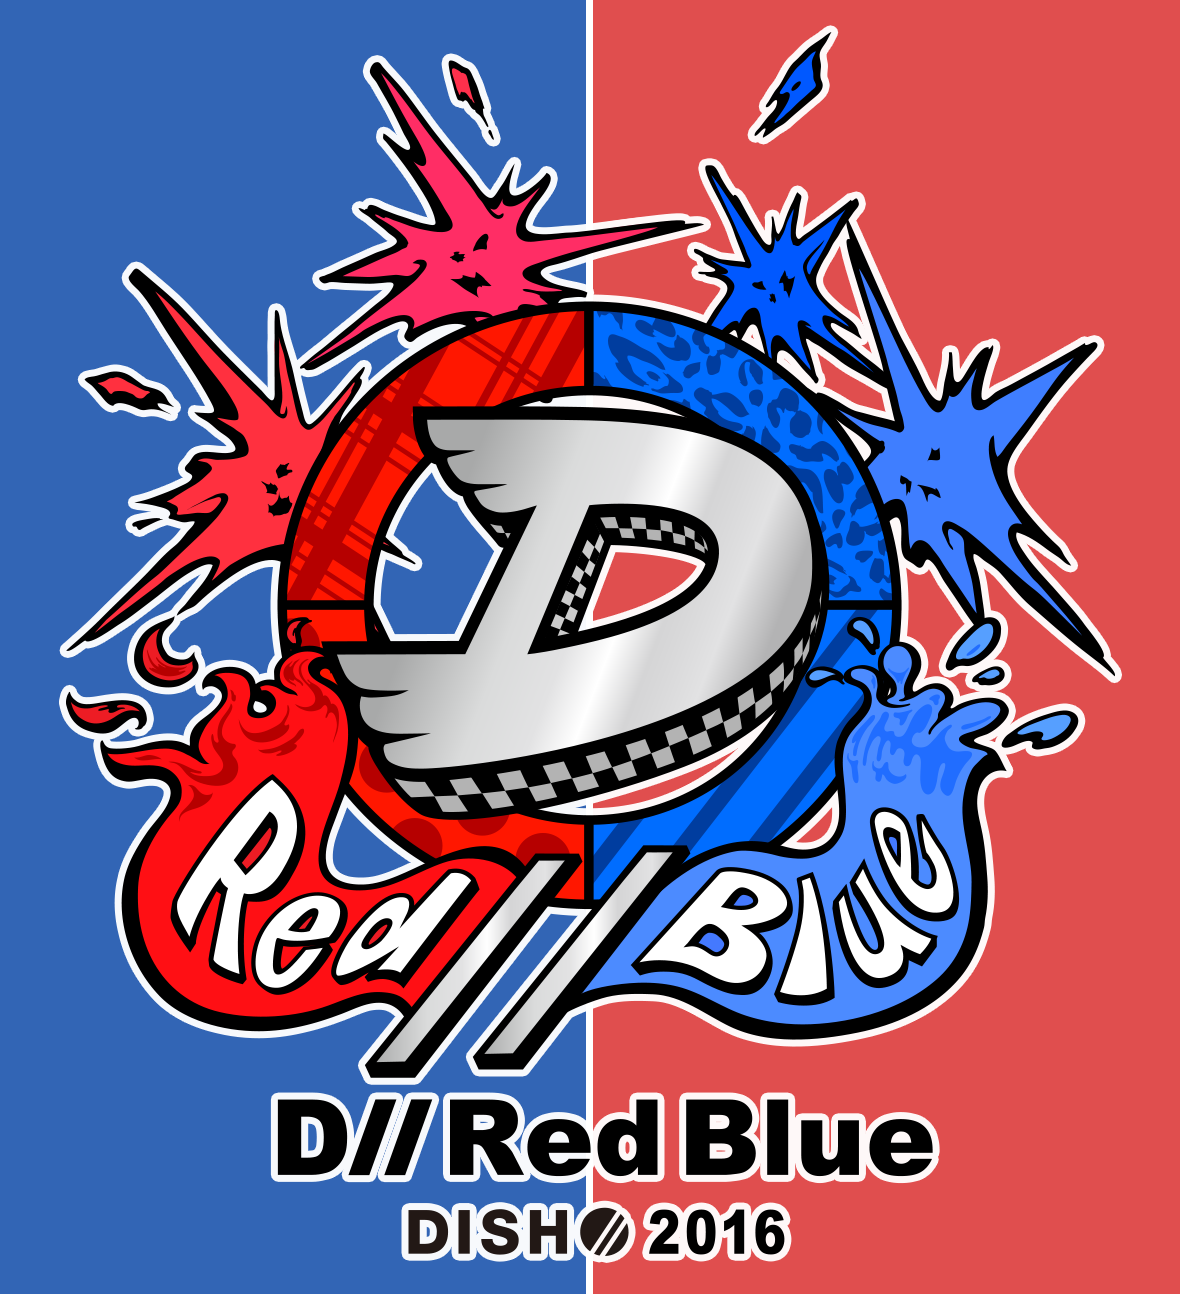 D//RedBlue